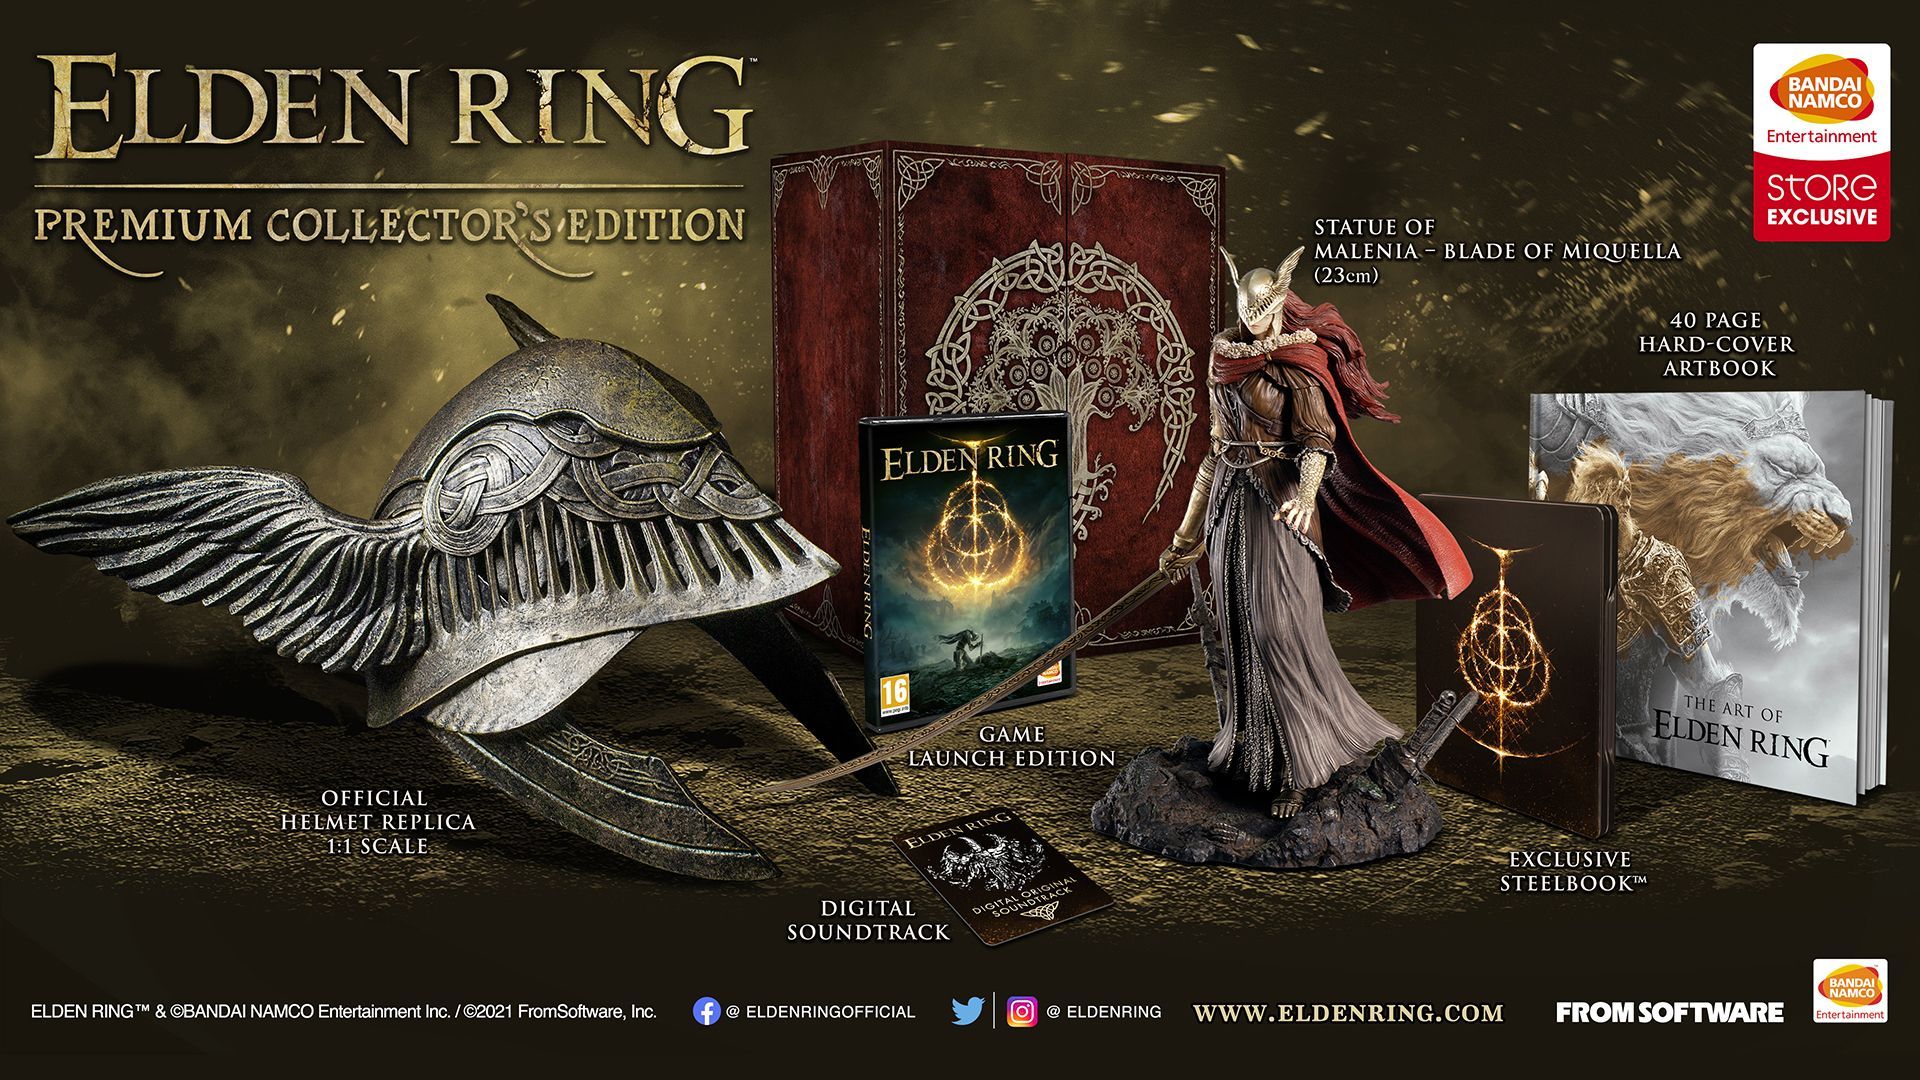 Elden Ring Premium Collector's Edition bonuses